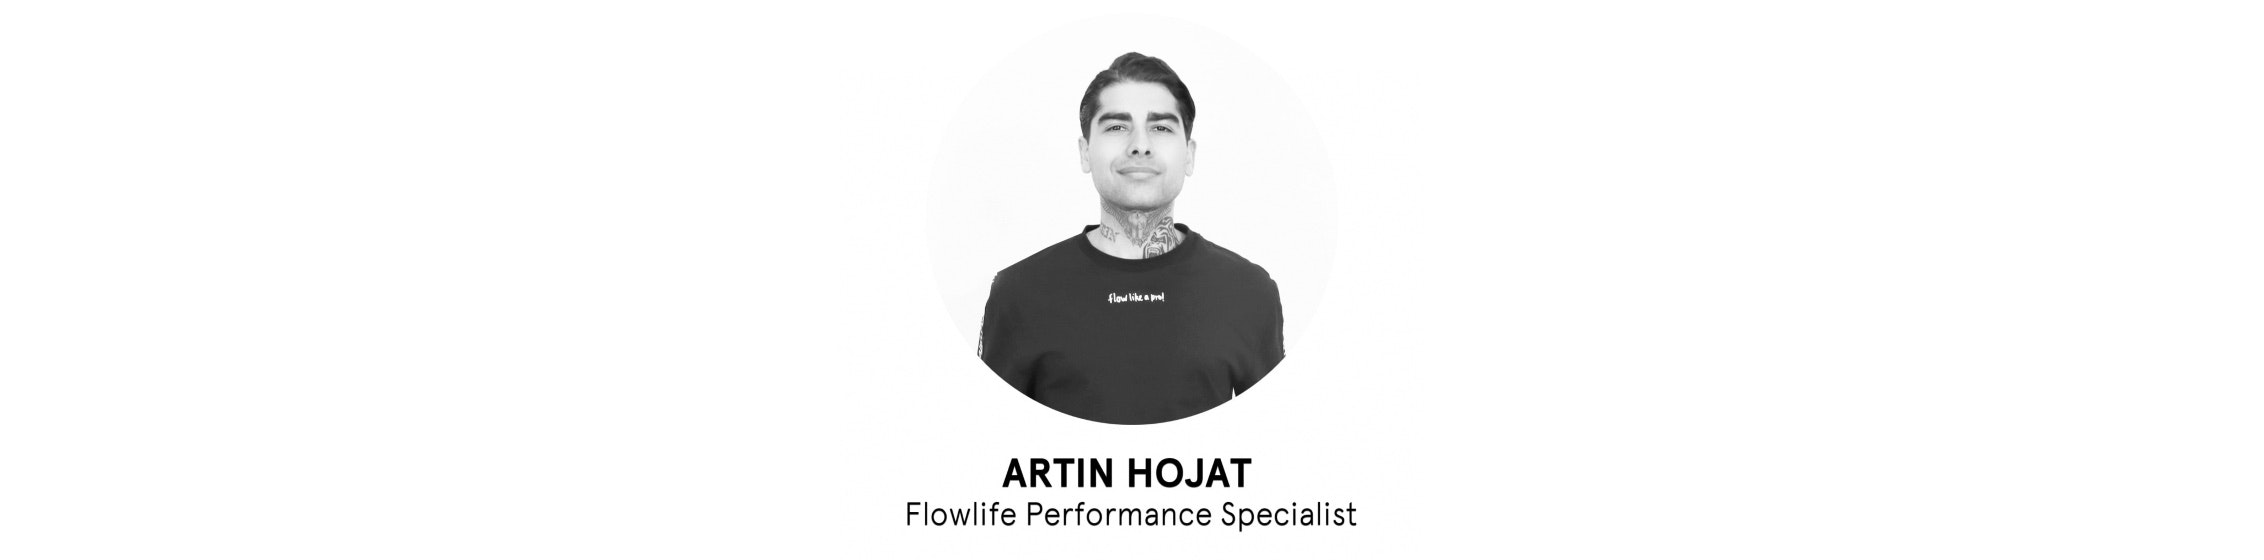 Artin Hojat, Flowlife Performance Specialist